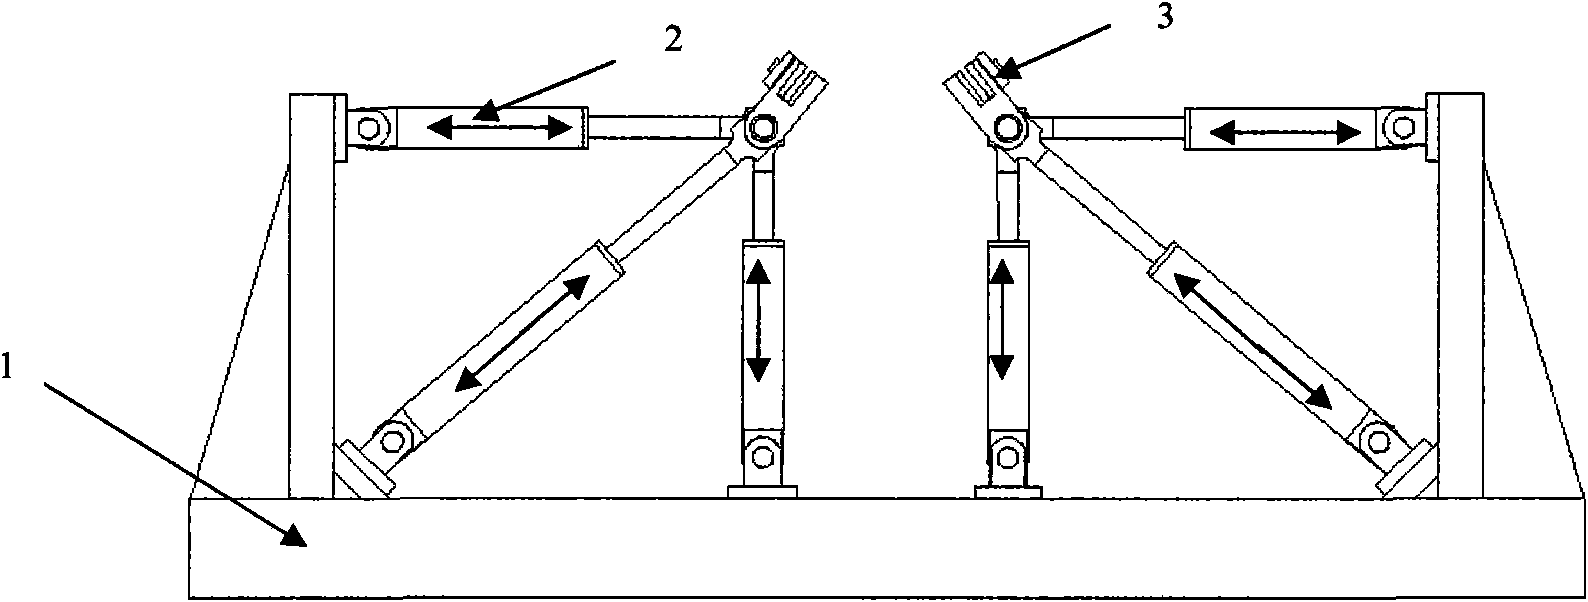 Plate stretch-forming machine